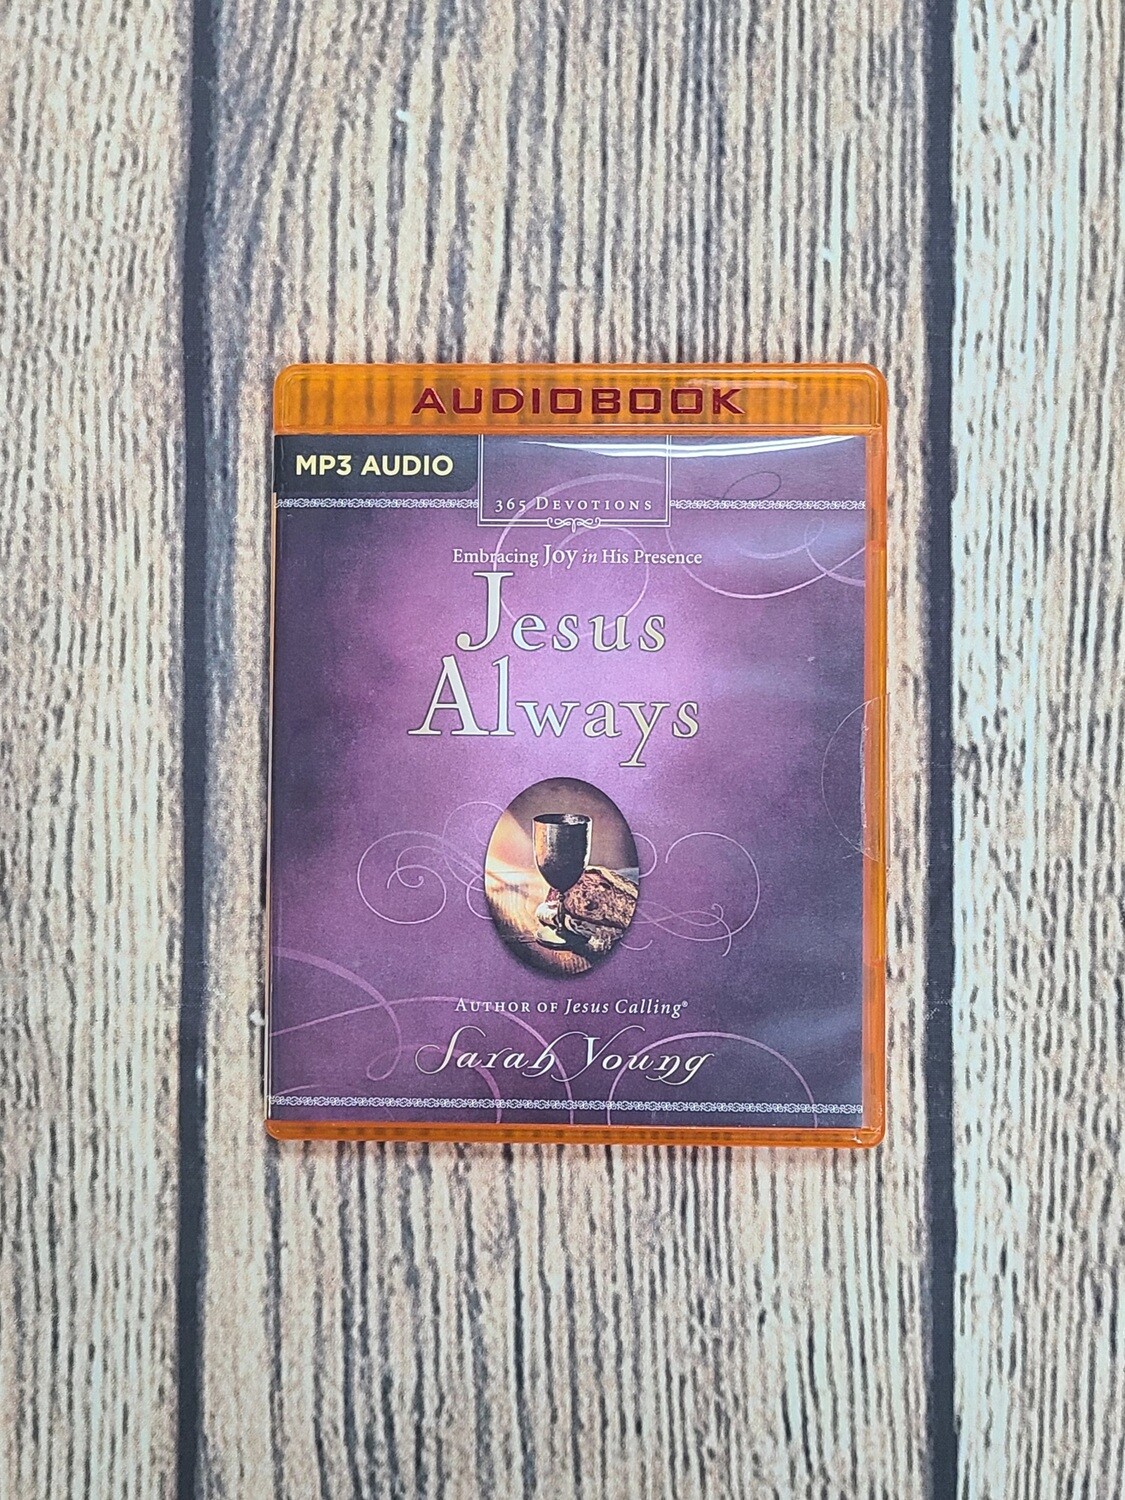 Jesus Always by Sarah Young - Audiobook